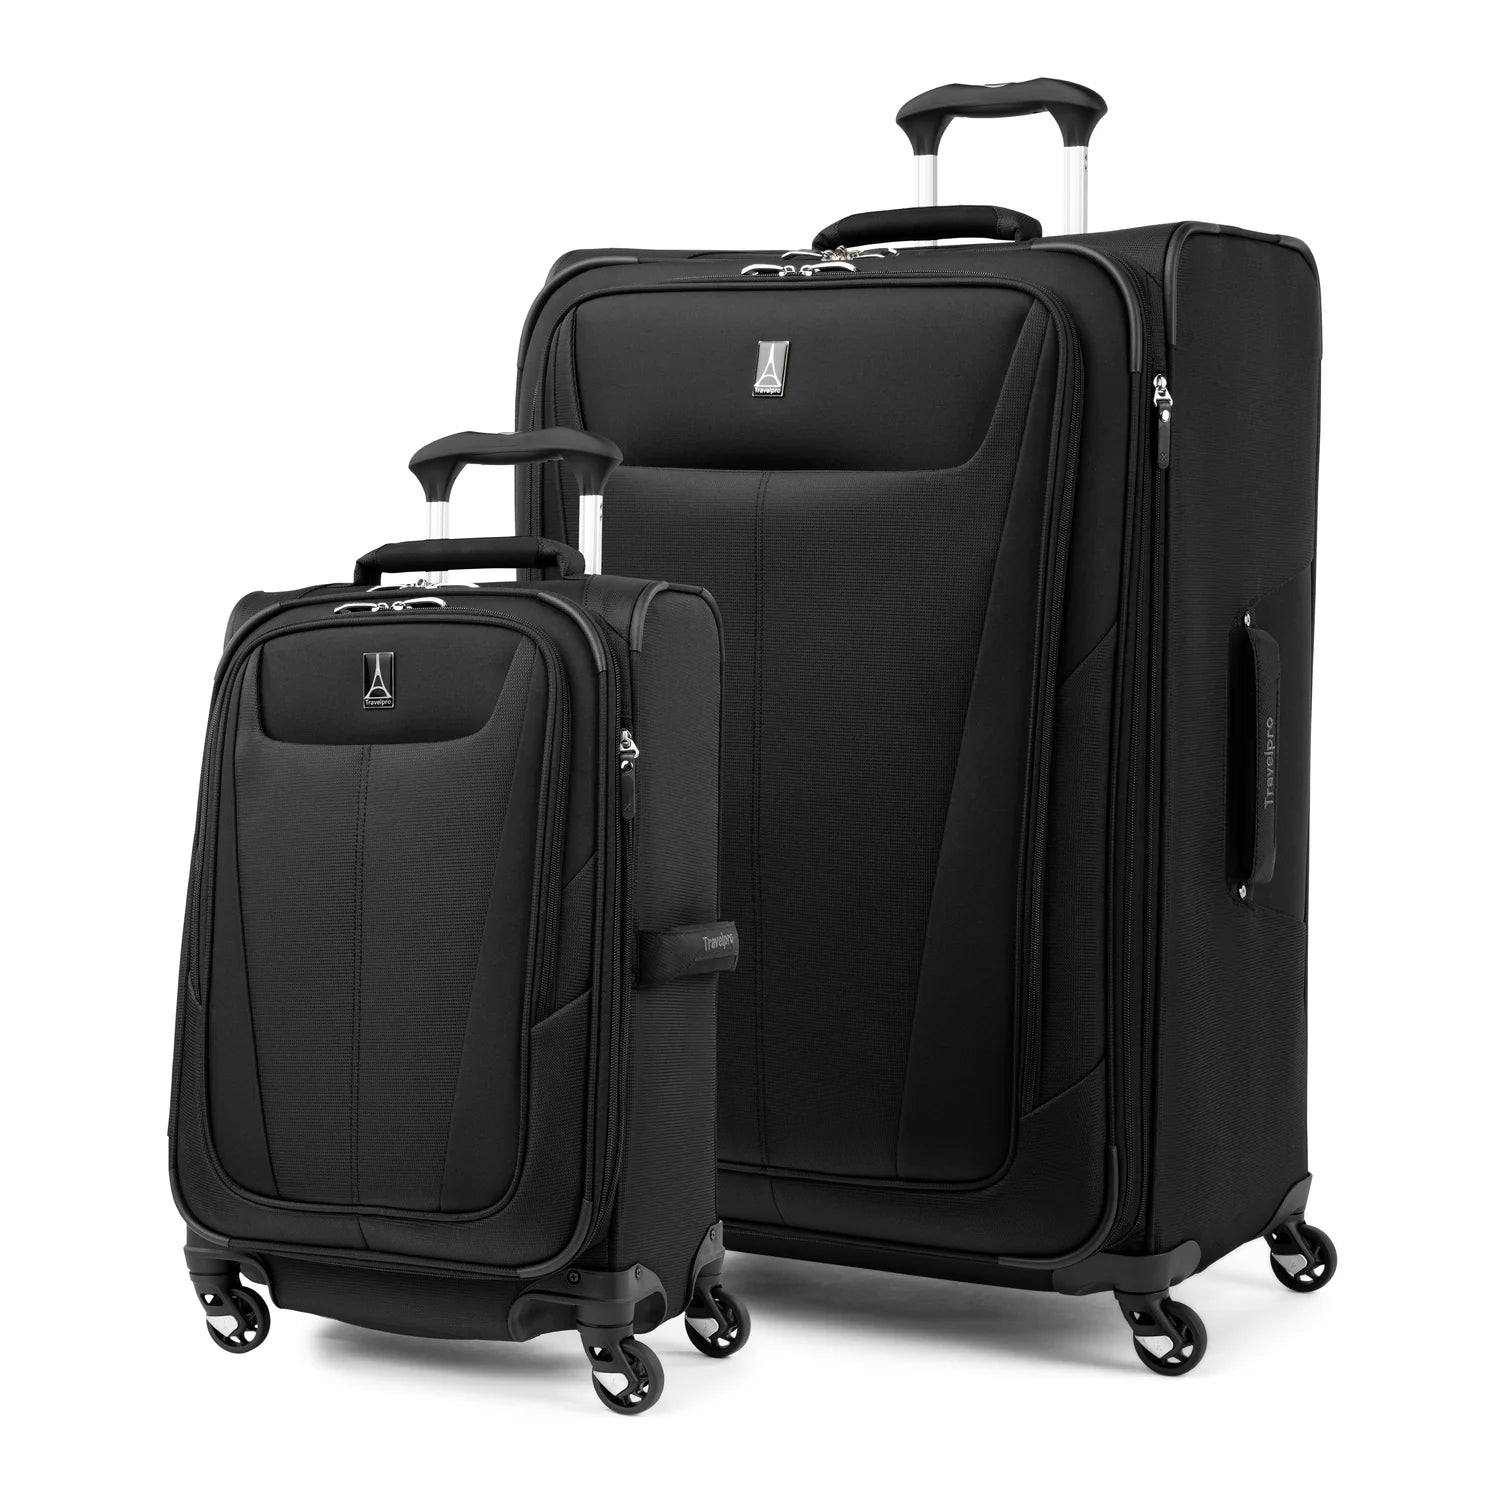 Maxlite 5 21" / 29" Luggage Set